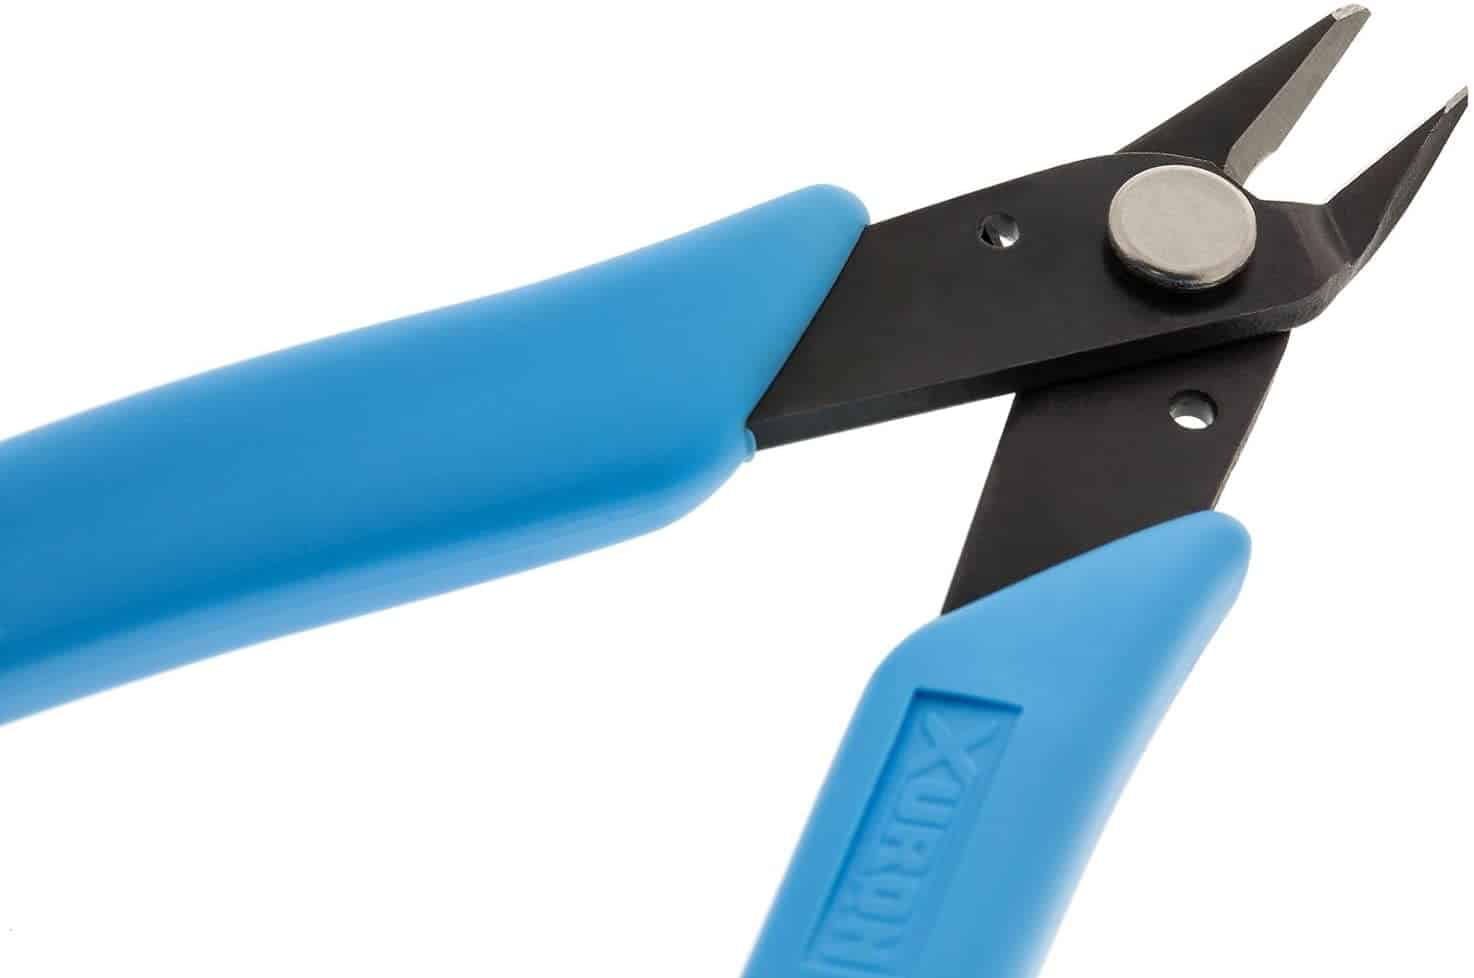 Flush cutter with best blade technology- Xuron 170-II Micro-Shear